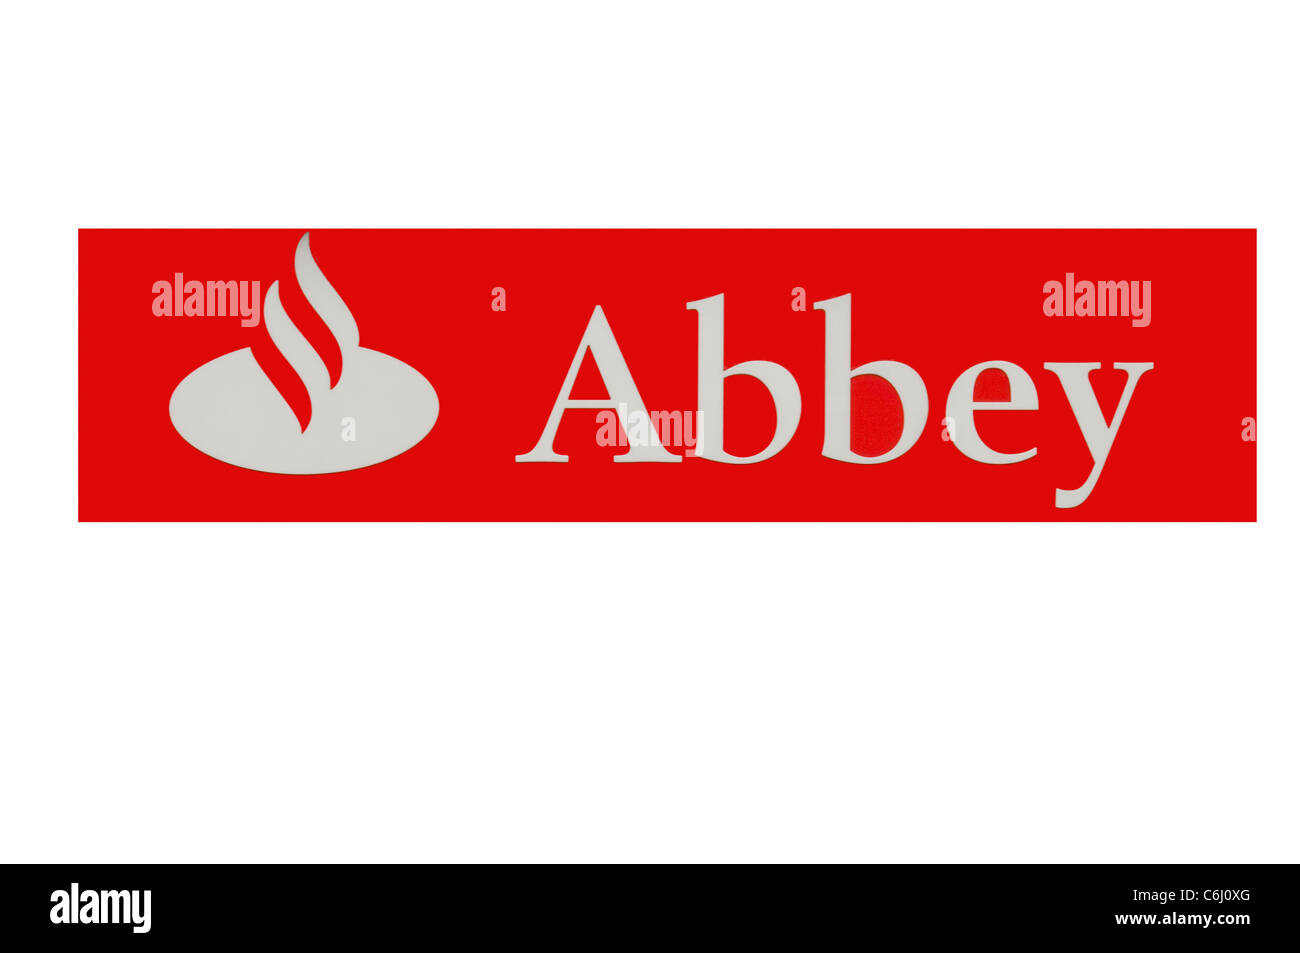 Abbey Bank Sign High Street Banks uk Stock Photo